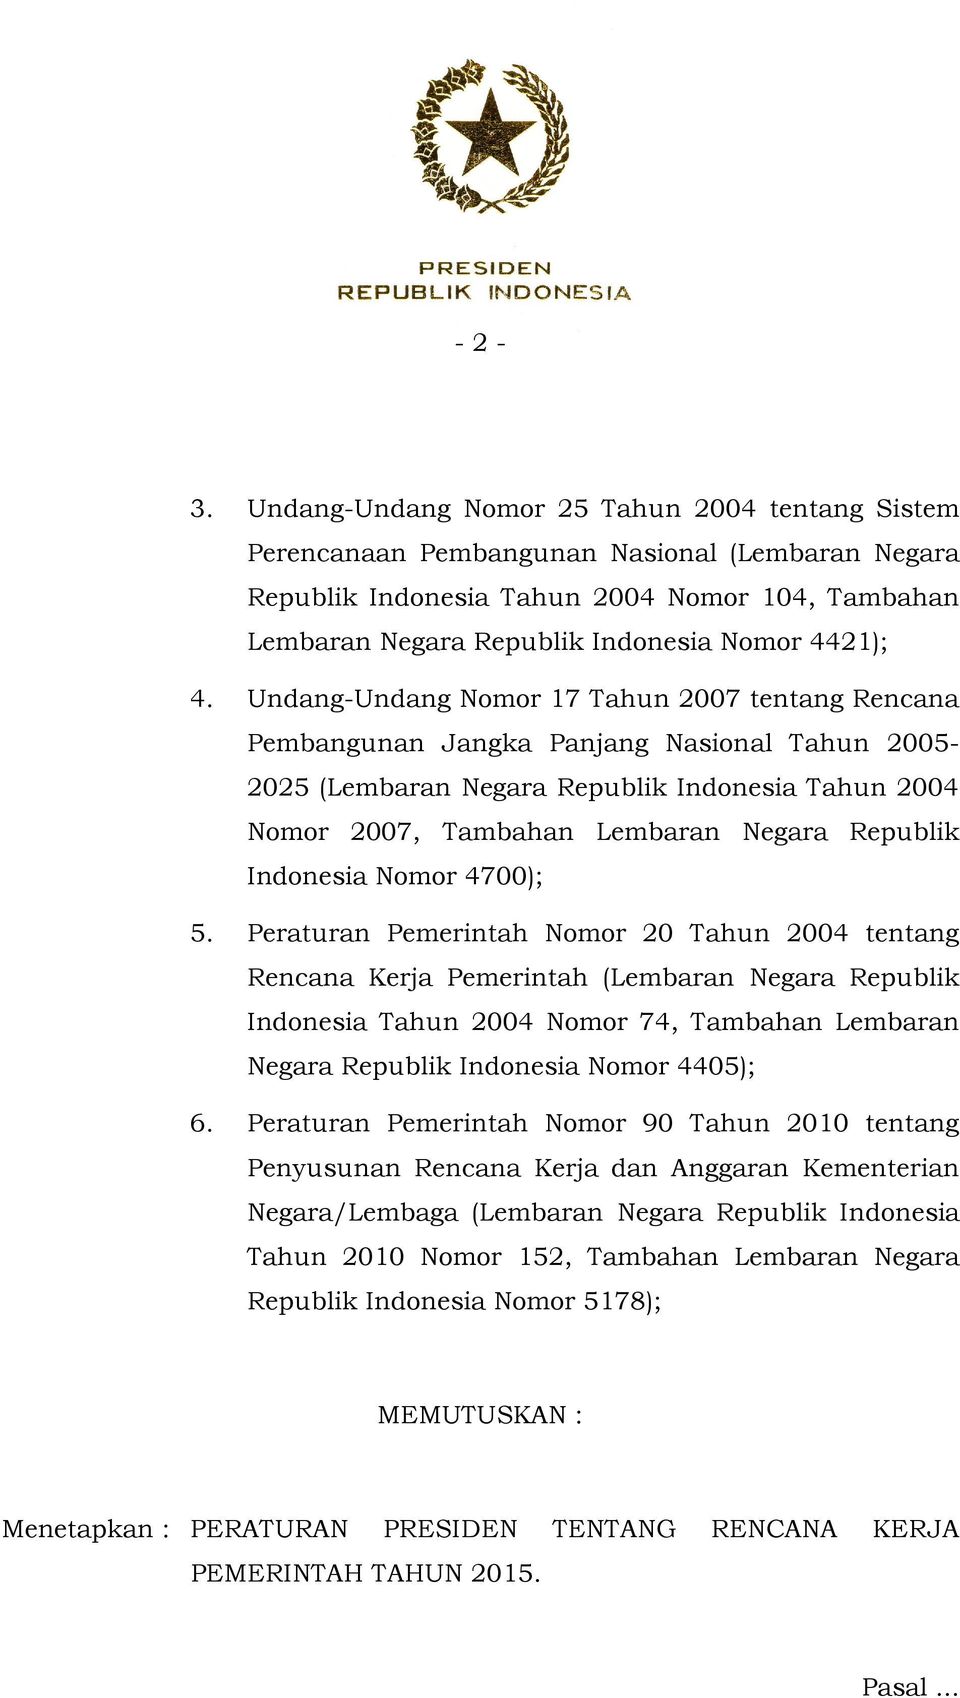 Undang-Undang Nomor 17 Tahun 2007 tentang Rencana Pembangunan Jangka Panjang Nasional Tahun 2005-2025 (Lembaran Negara Republik Indonesia Tahun 2004 Nomor 2007, Tambahan Lembaran Negara Republik